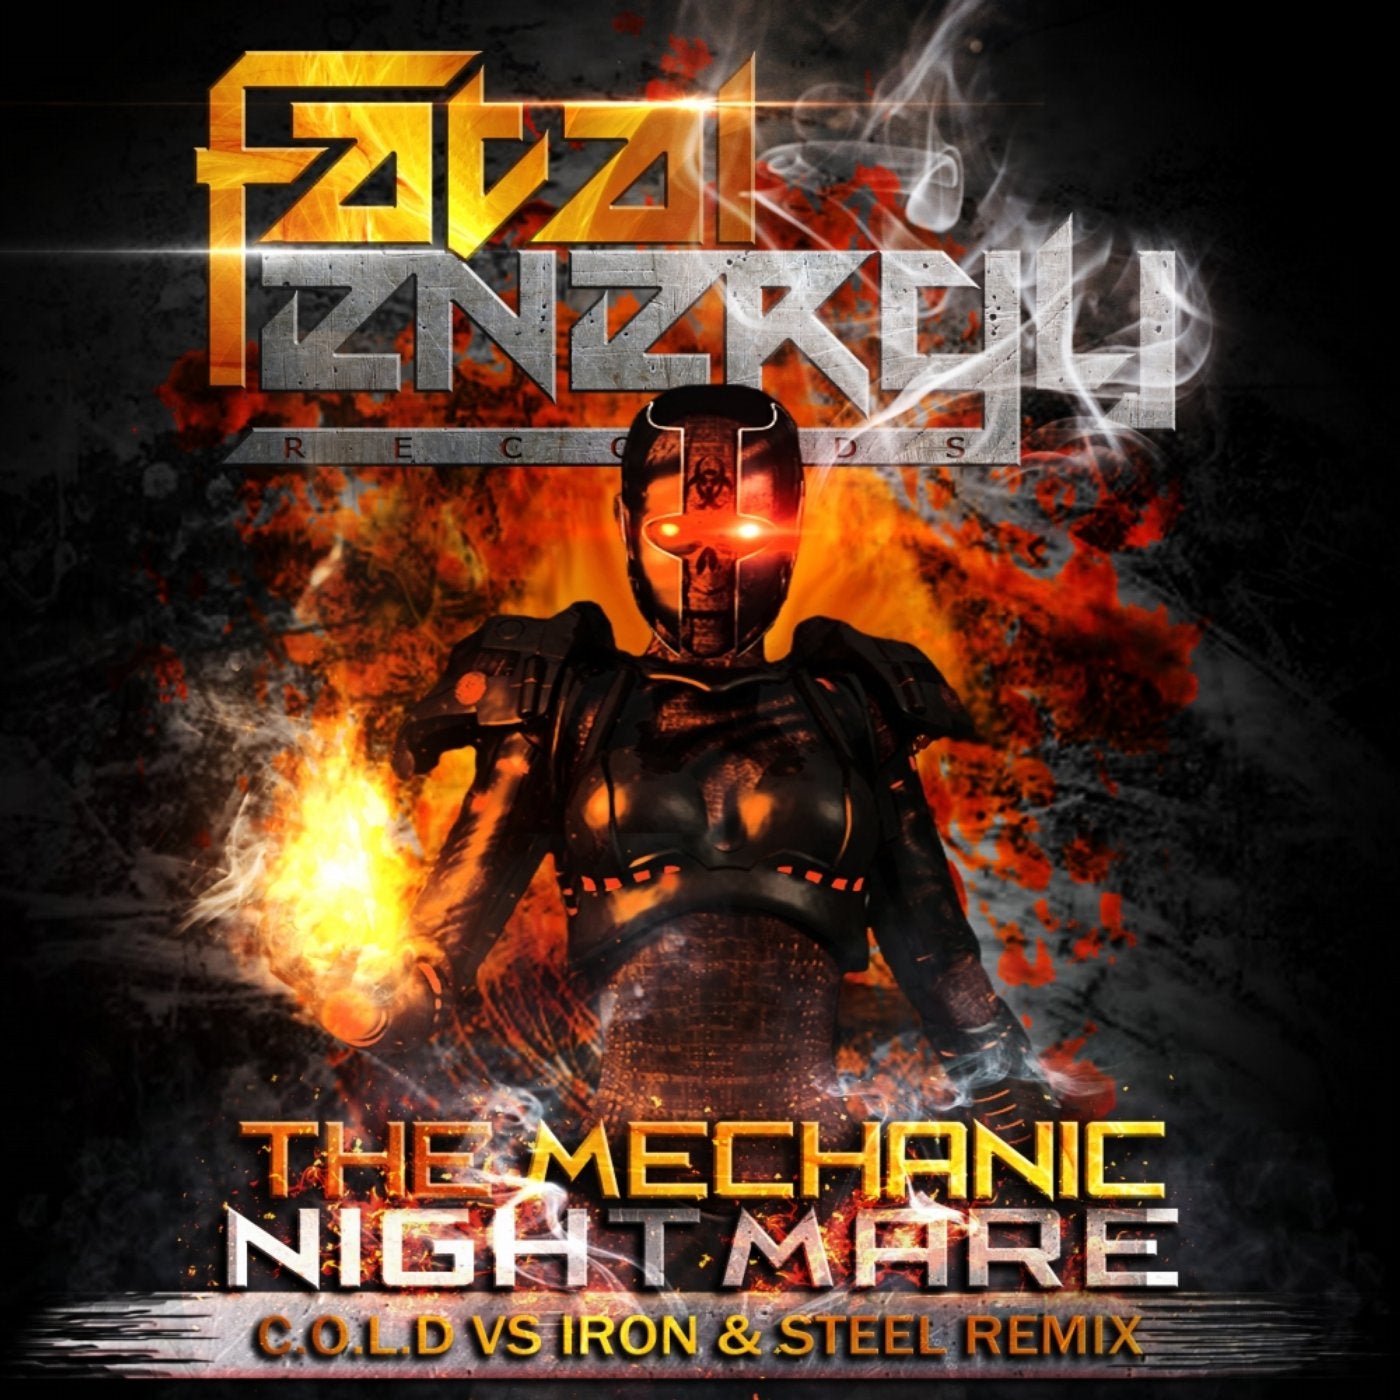 Nightmare (C.O.L.D. vs. Iron & Steel Remix)